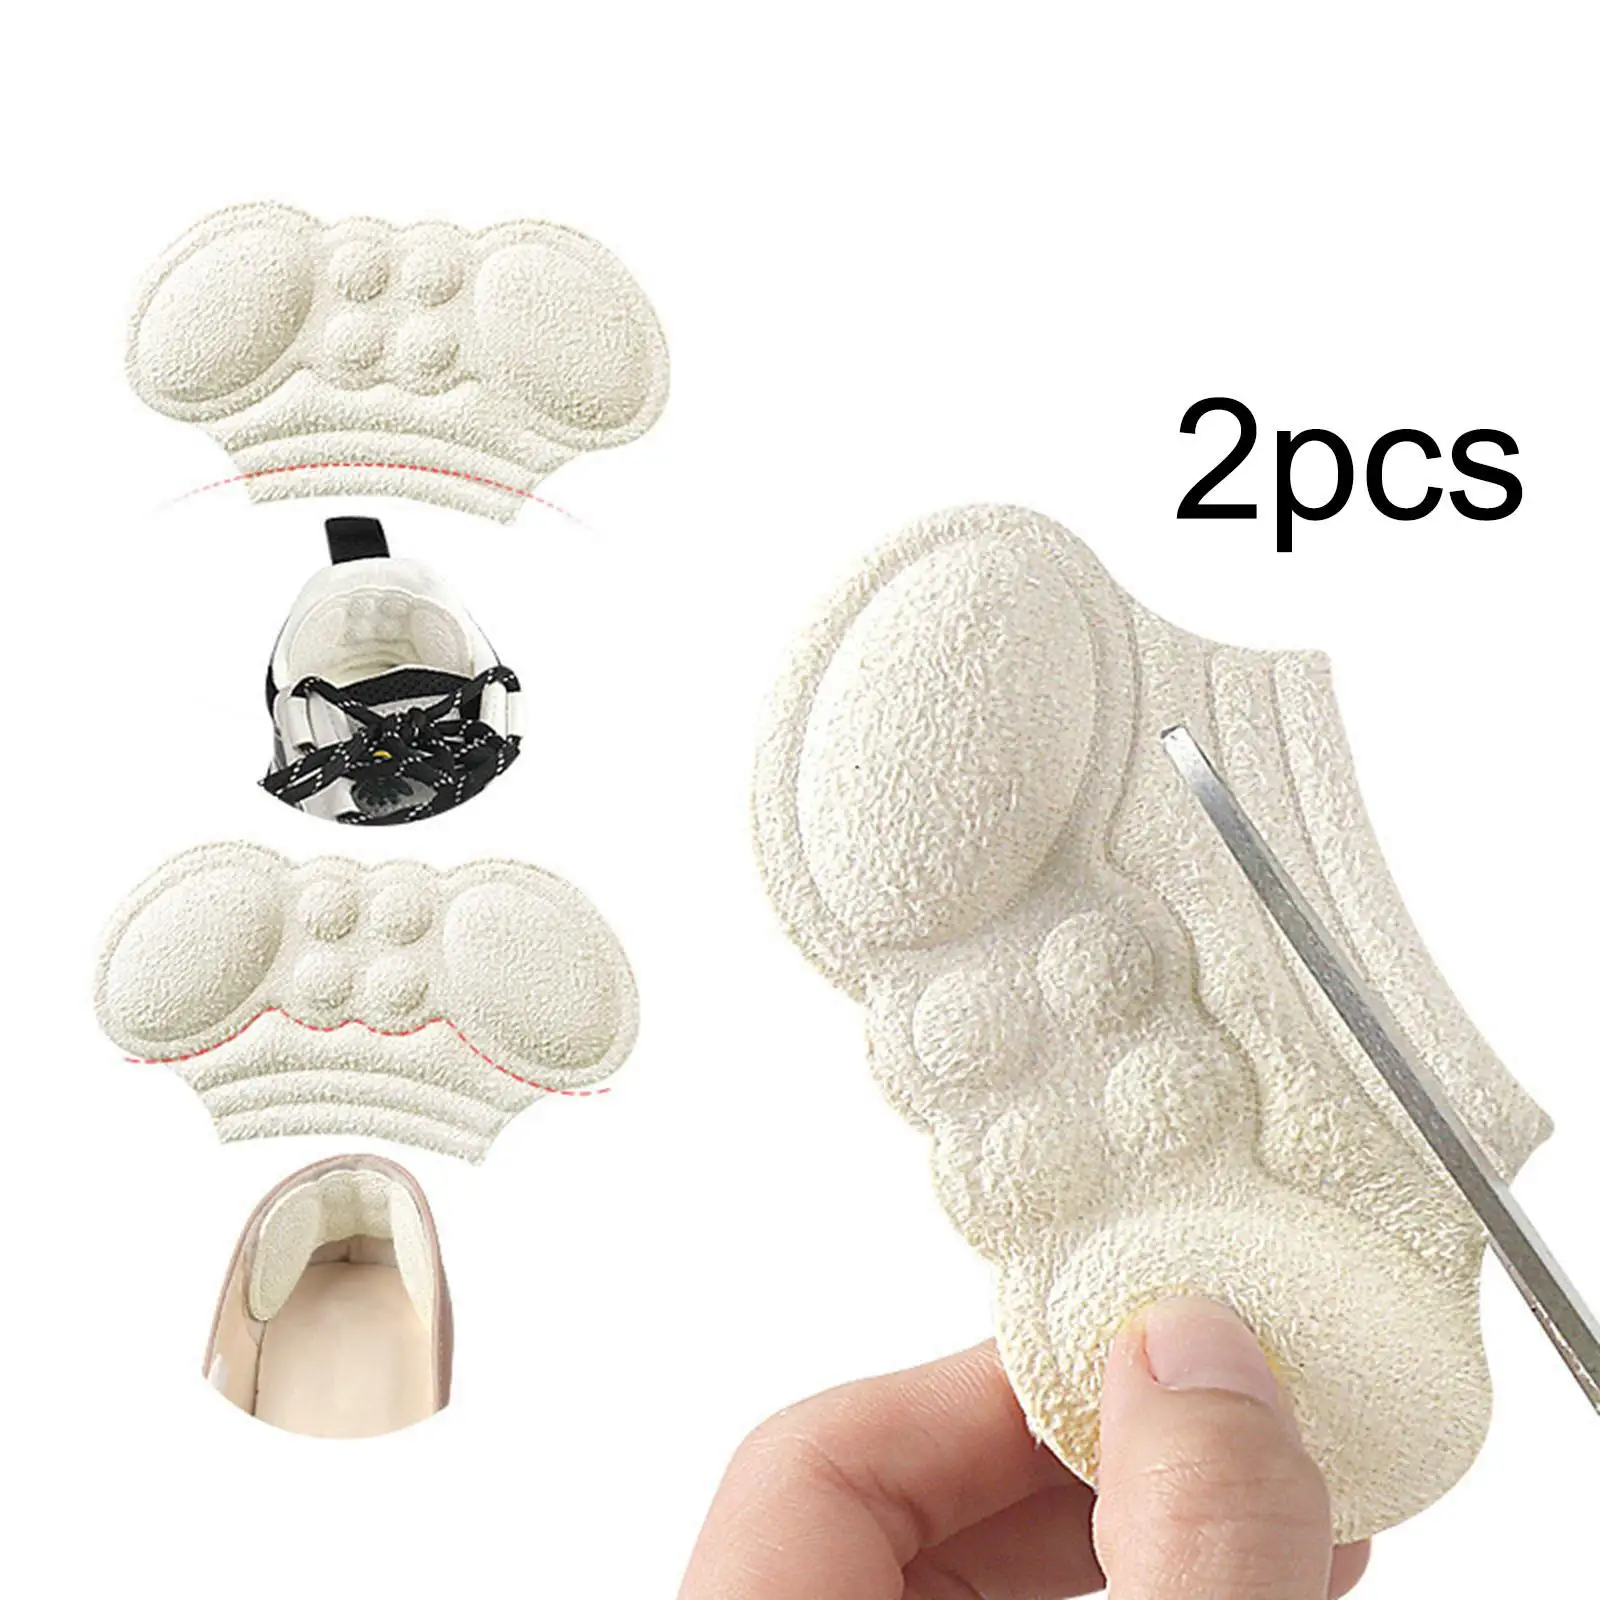 2Pcs Heel Grips Liner Comfort for Prevent Heel Slipping Rubbing Blisters